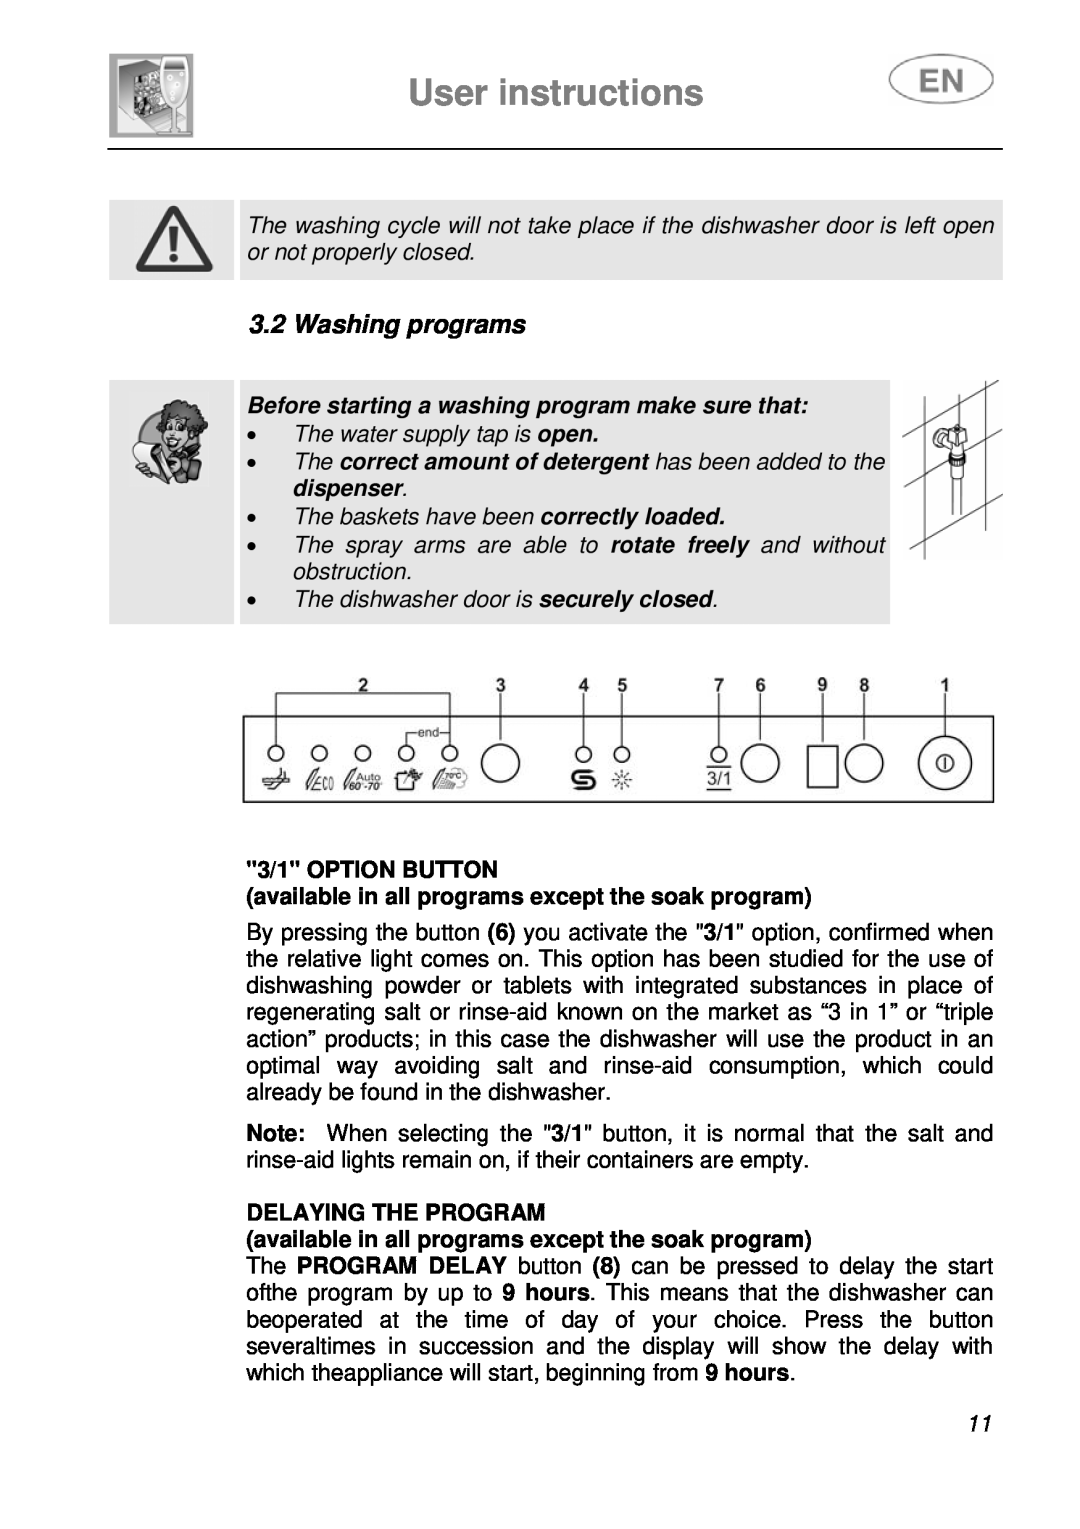 Smeg ST4108 manual Washing programs, User instructions, Before starting a washing program make sure that, 3/1 OPTION BUTTON 